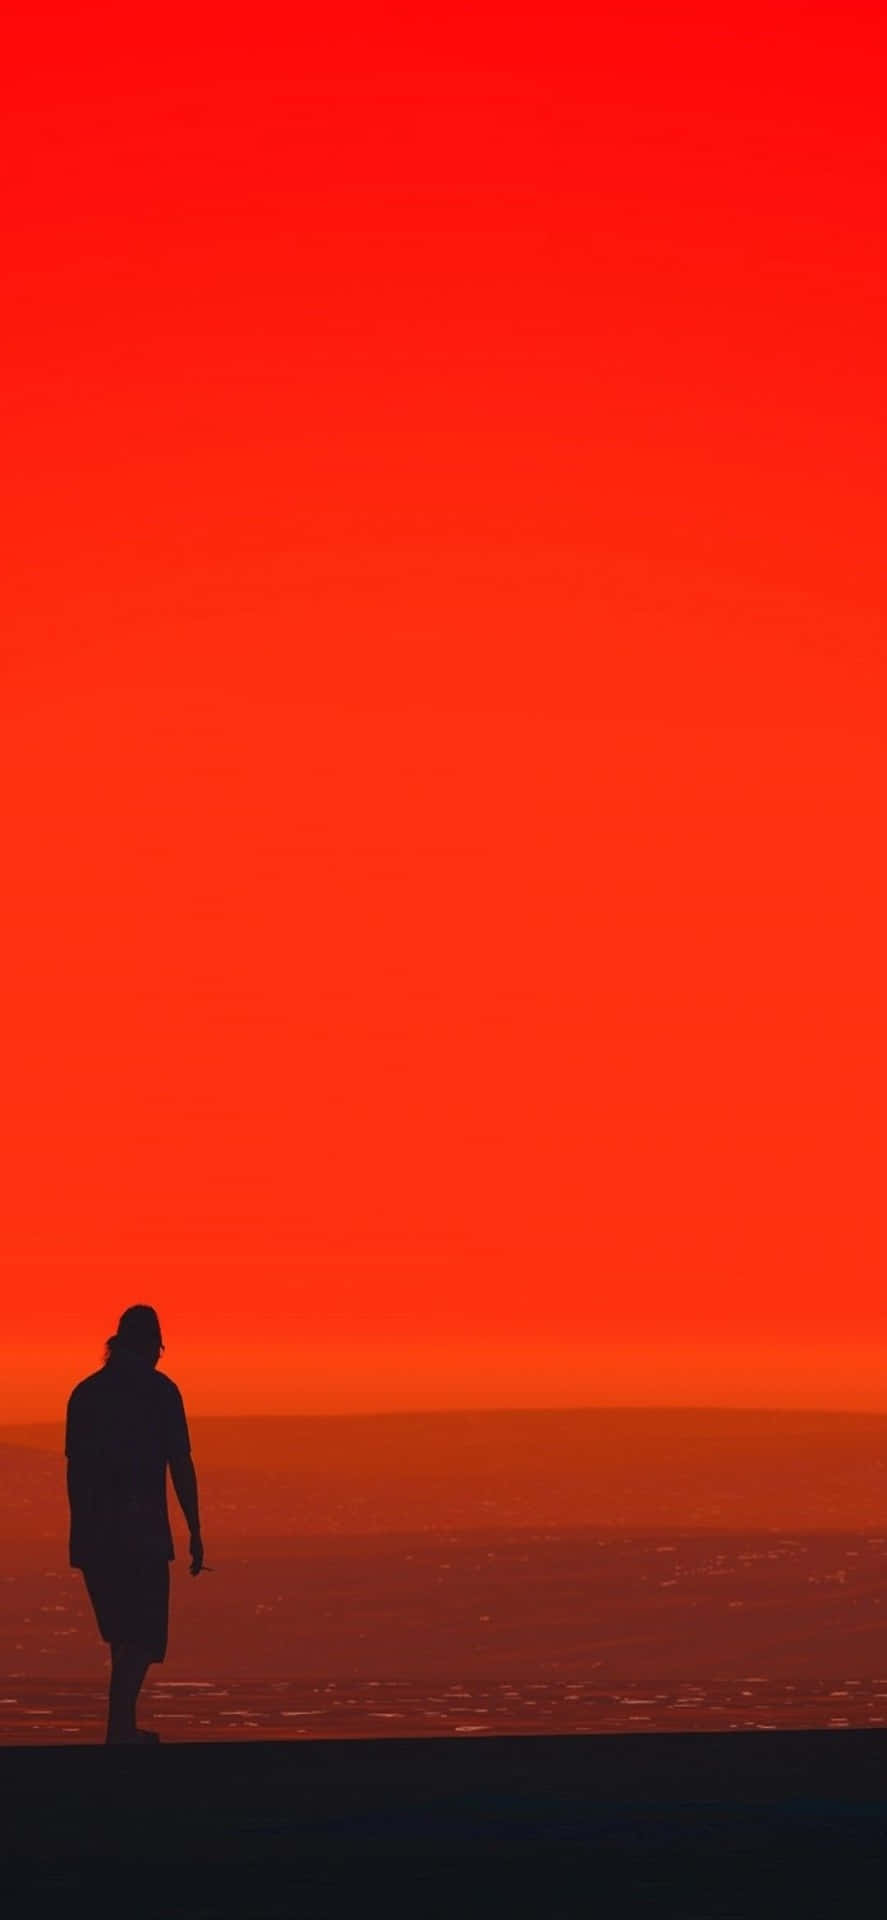 Iphonex Bakgrundsbild Med Grand Theft Auto V, Mörk Figur.